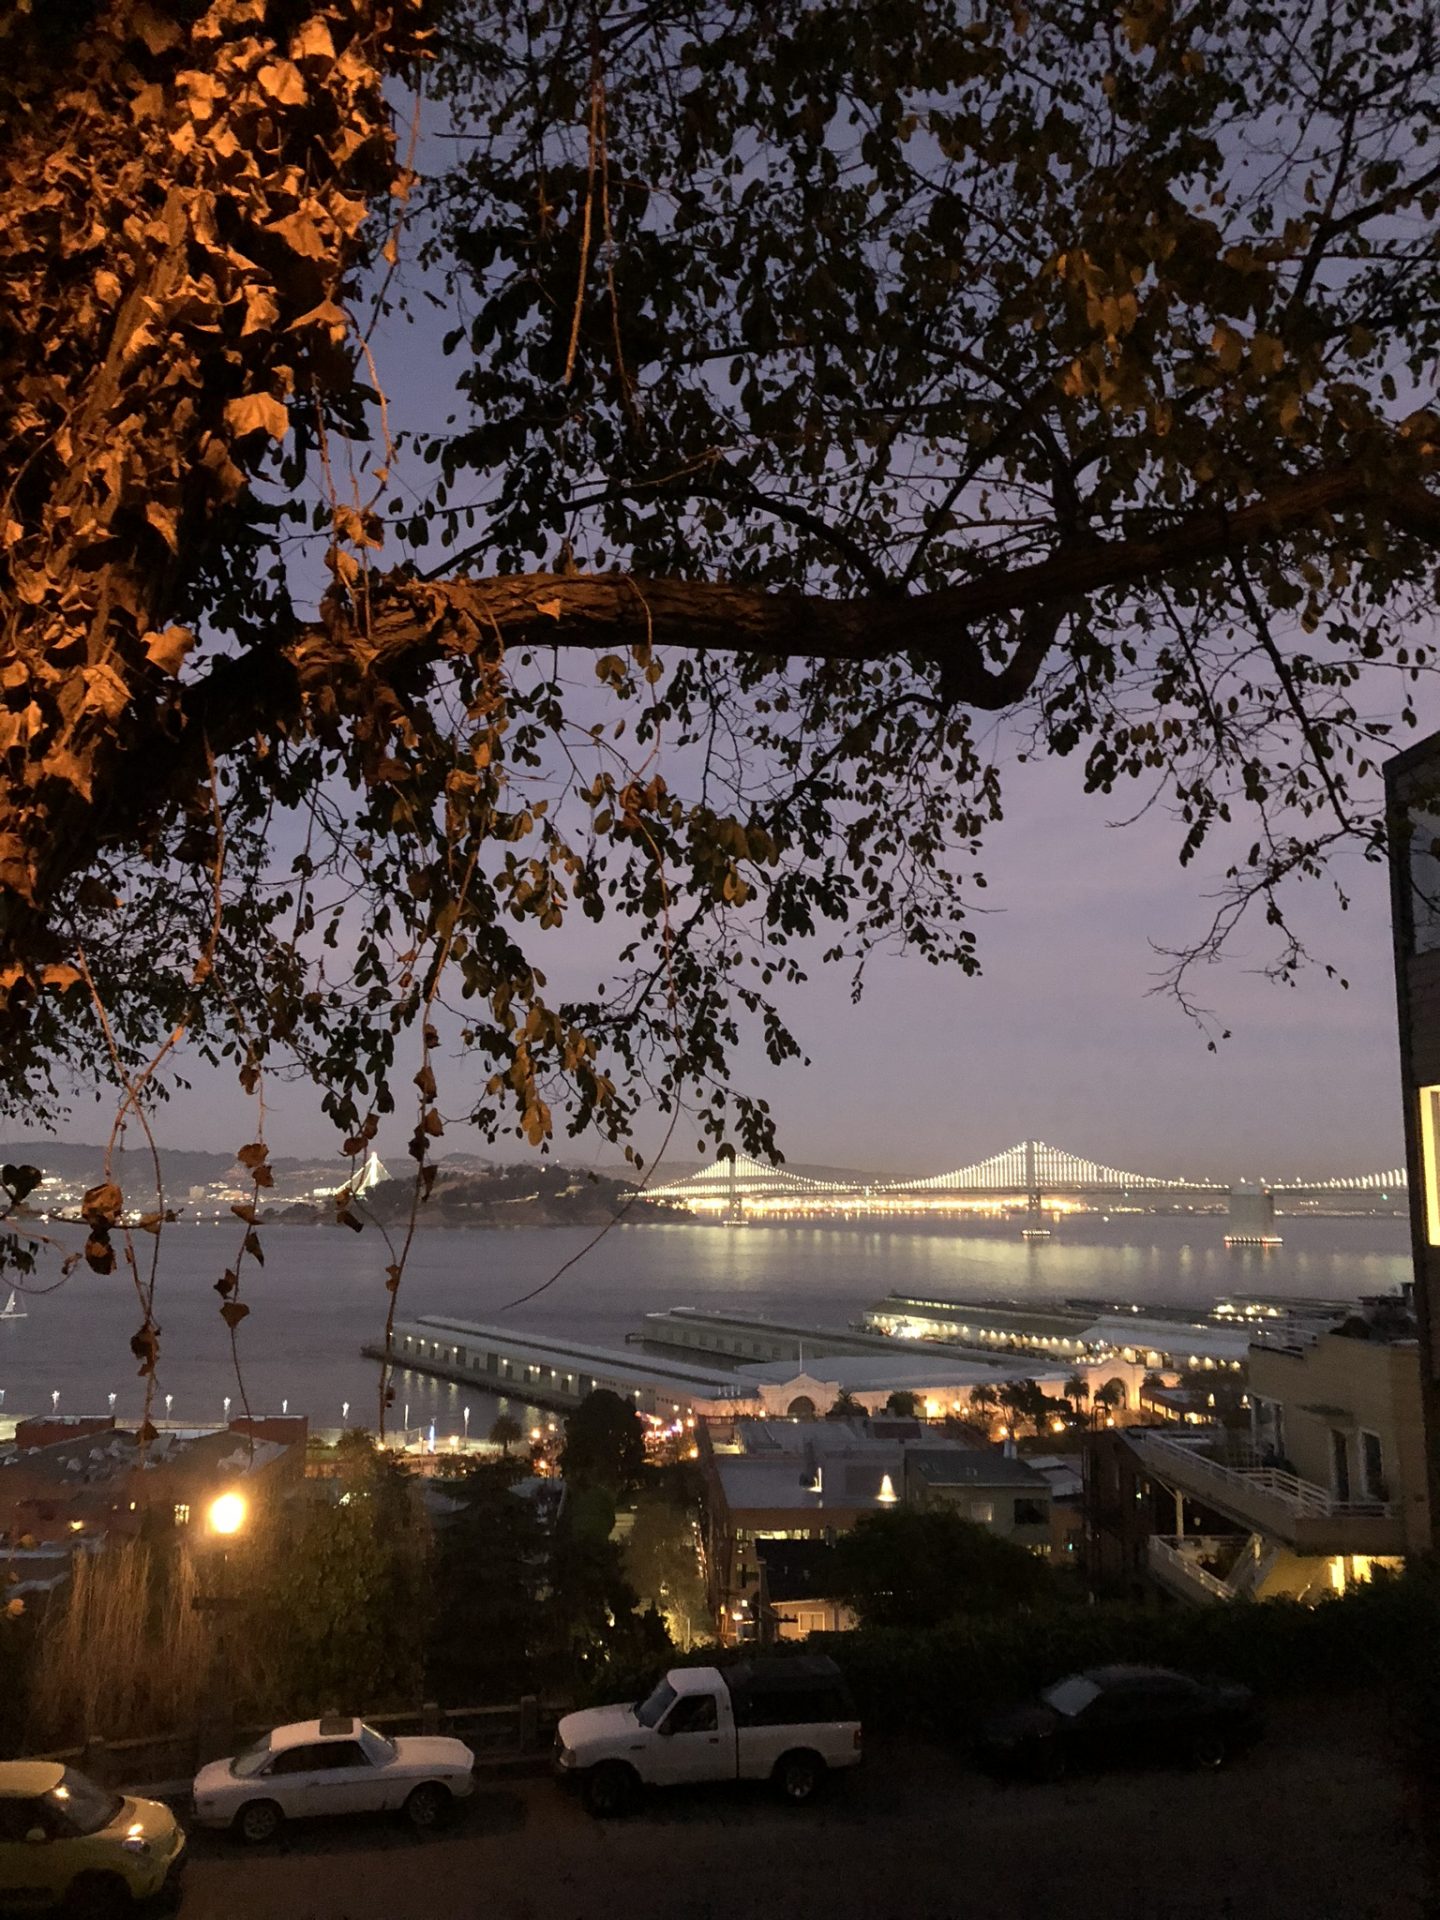 Night across the San Francisco - Oakland Bridge